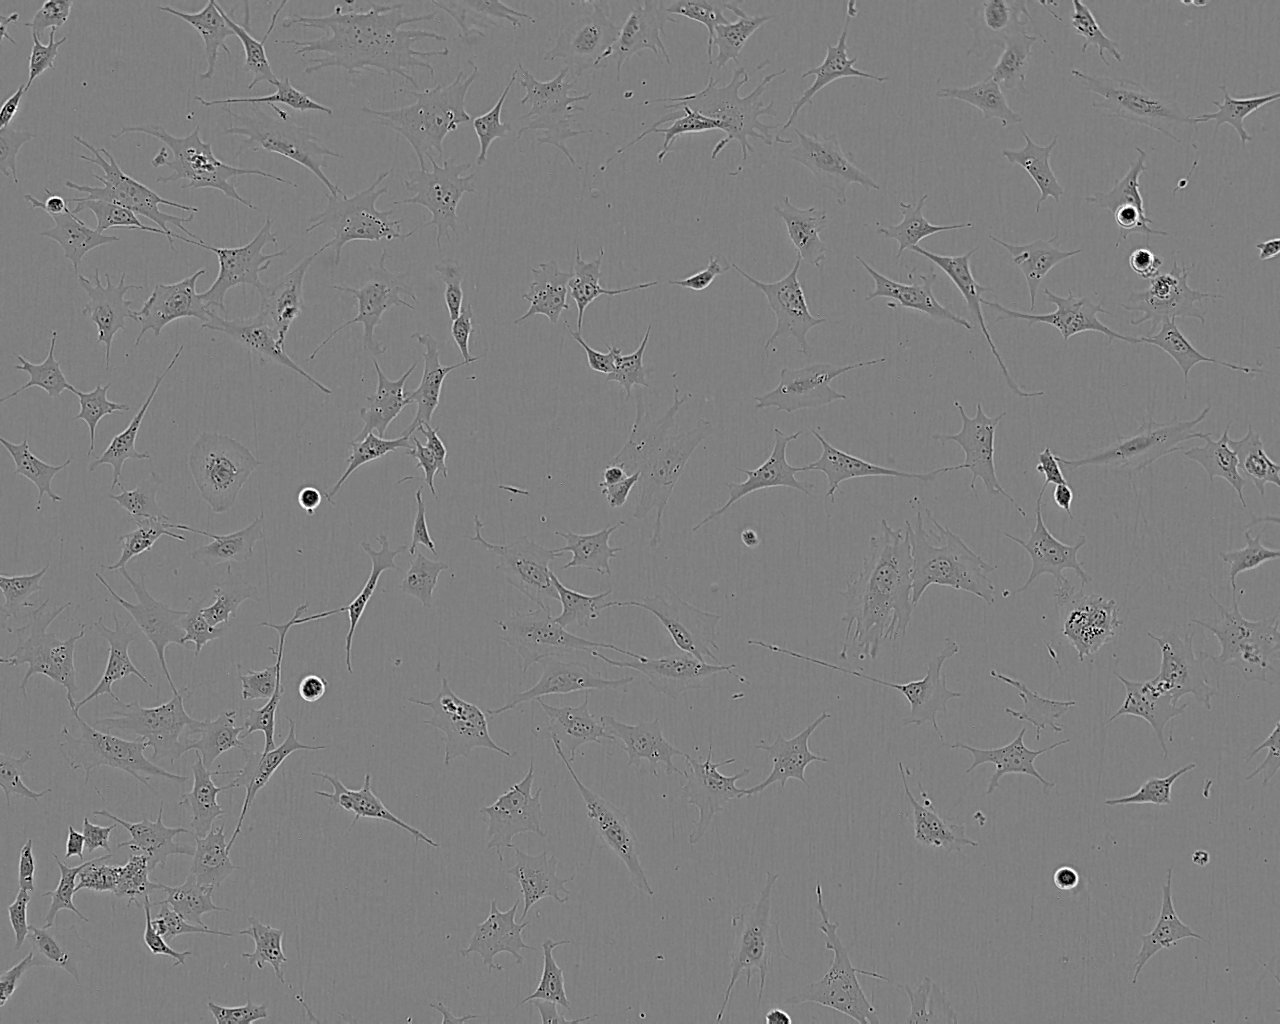 NUGC-4 epithelioid cells人胃癌细胞系